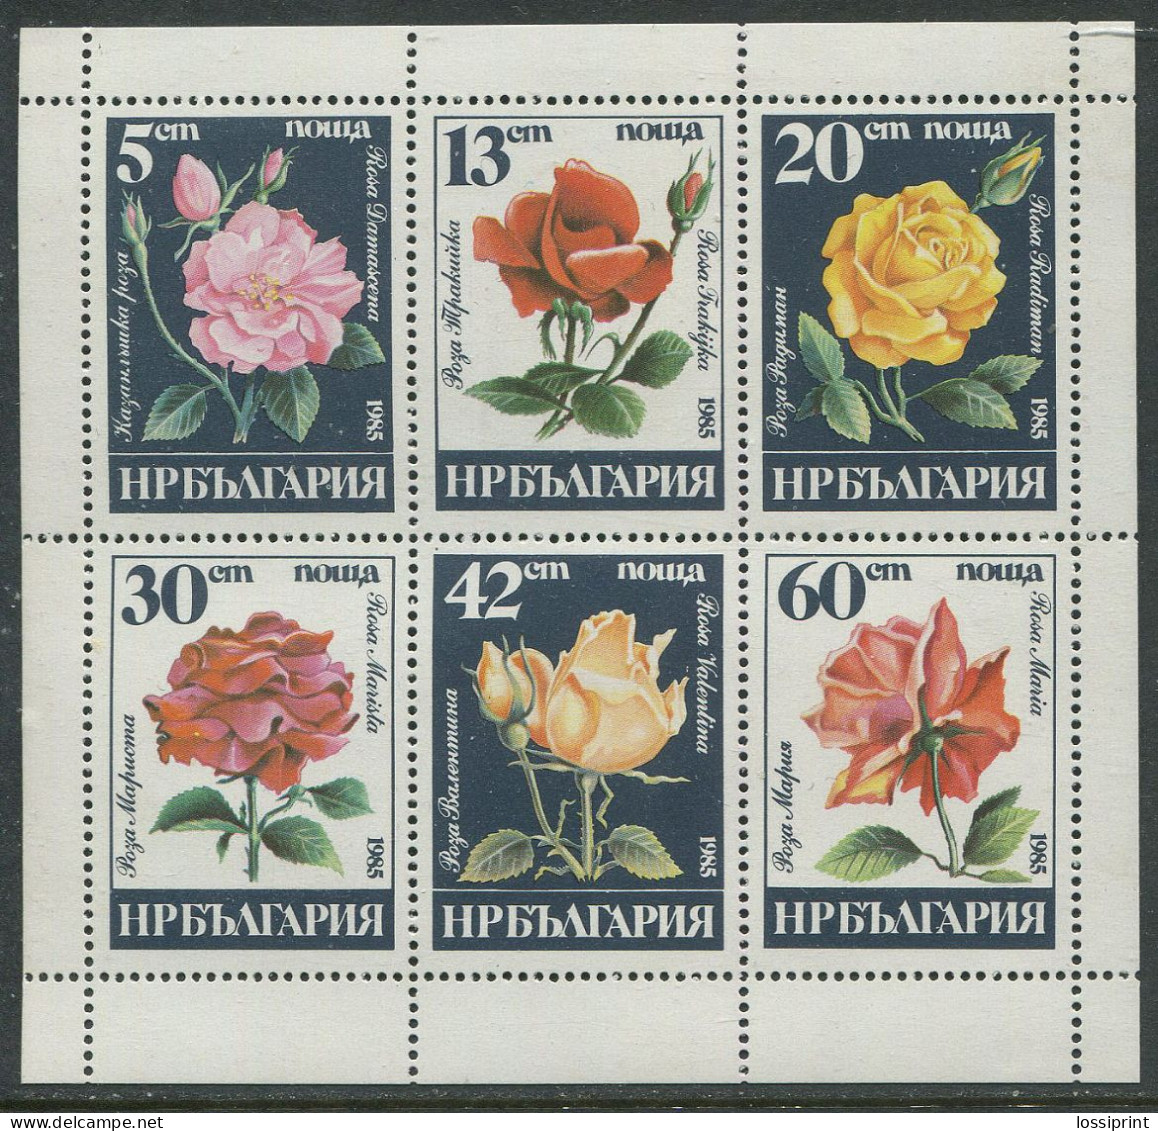 Bulgaria:Unused Block Flowers, Roses, 1985, MNH - Rose